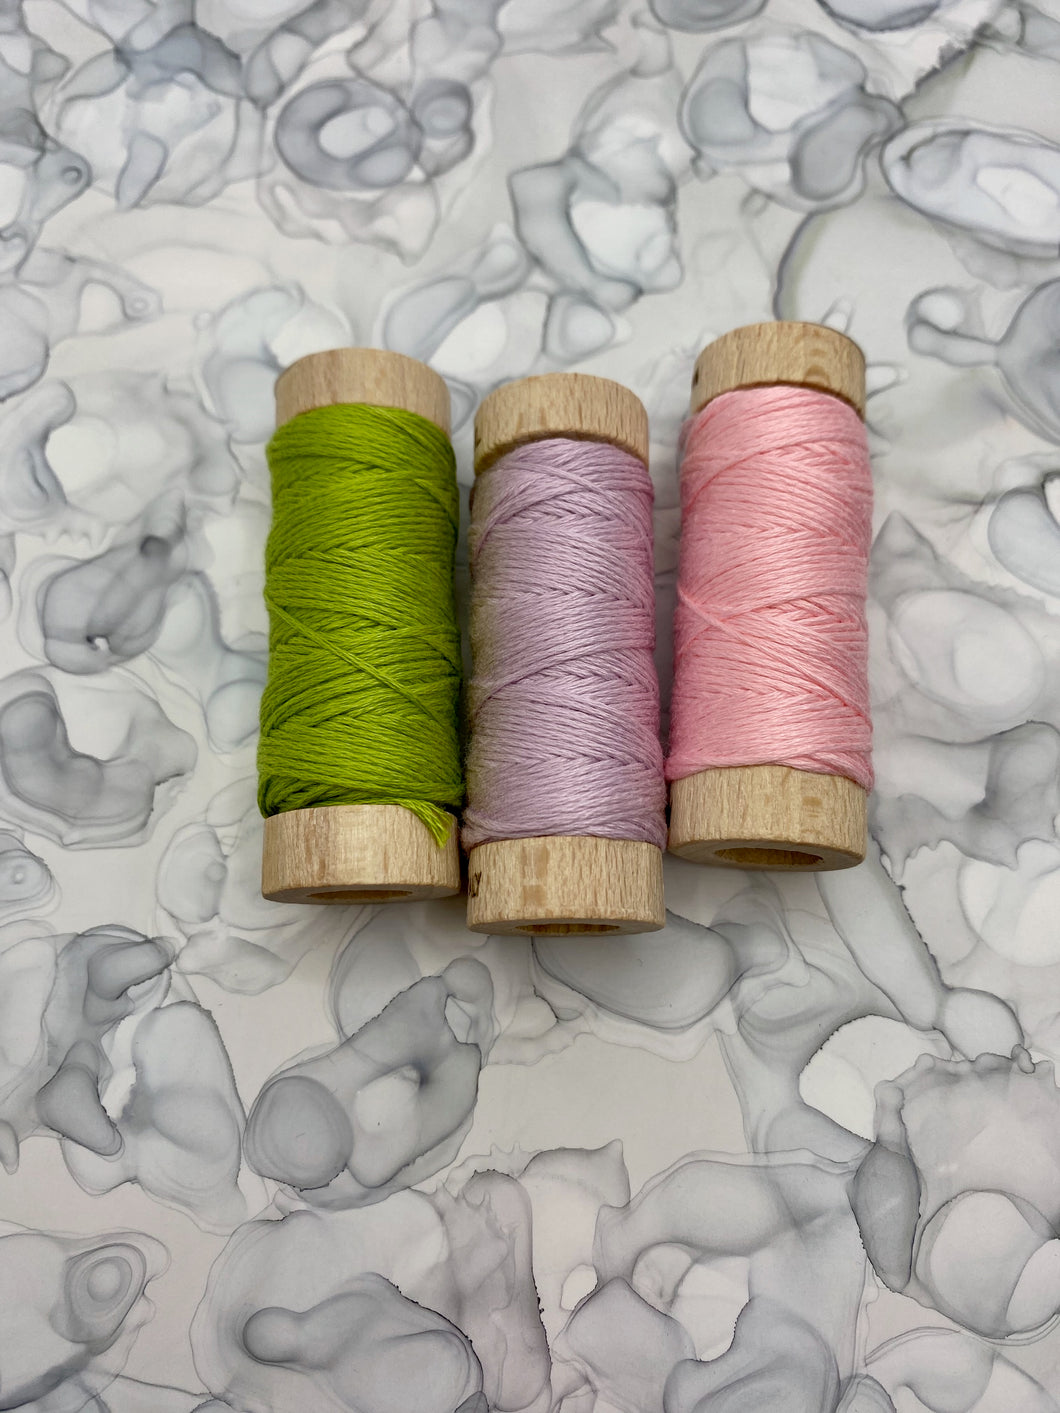 Aurifil Pastel Trio Set of three 6-strand embroidery floss spools